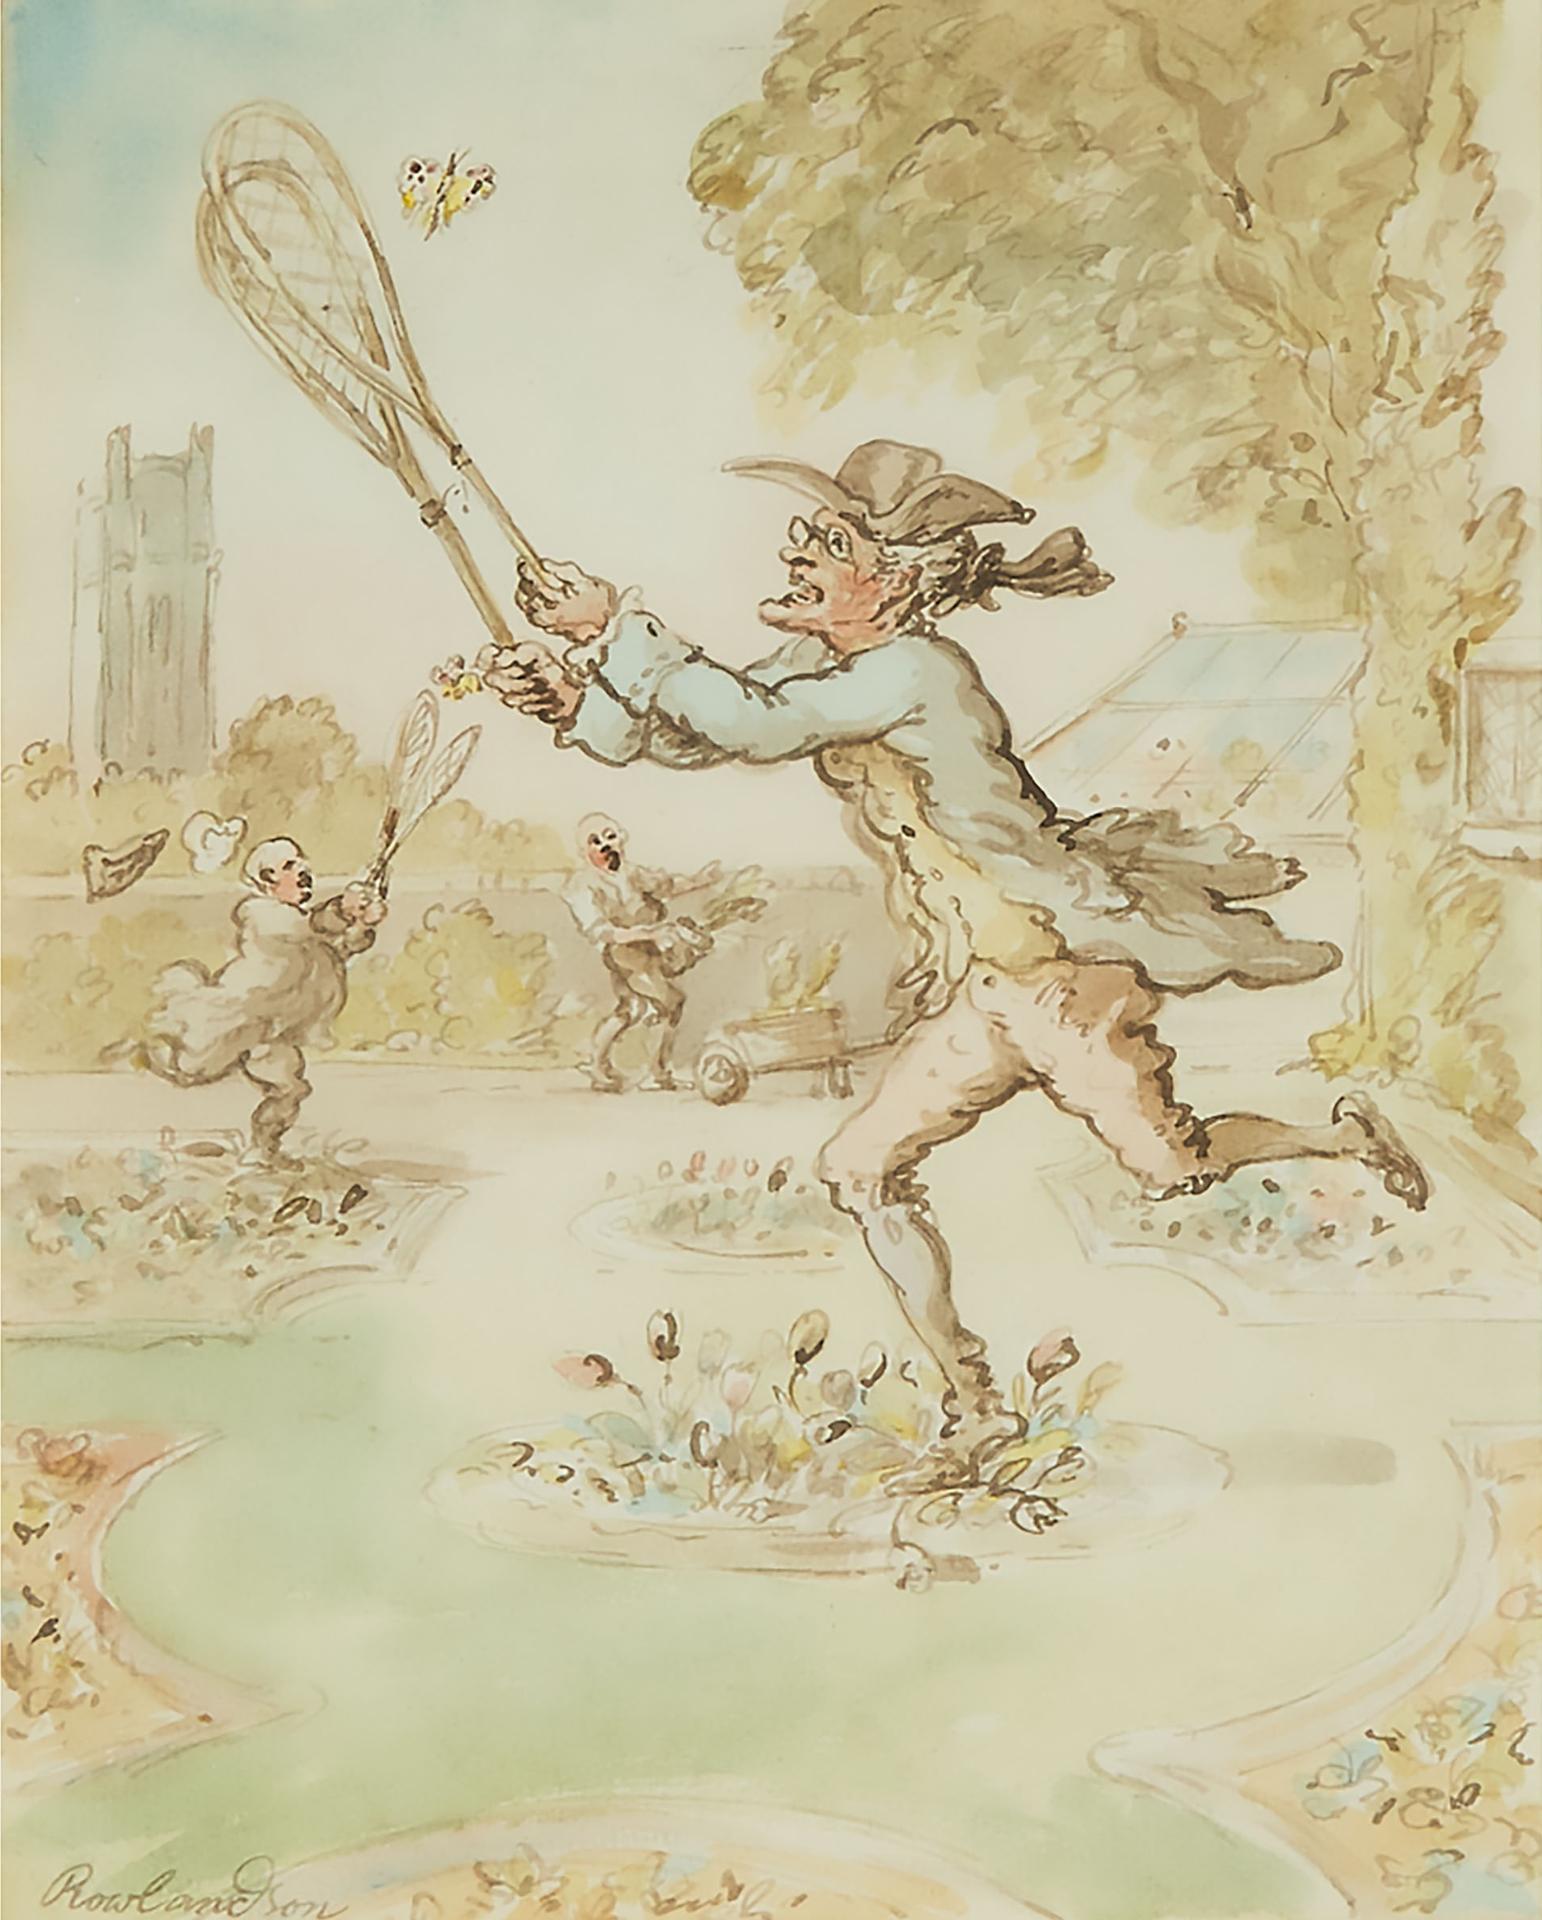 Thomas Rowlandson (1756-1827) - Catching Butterflies